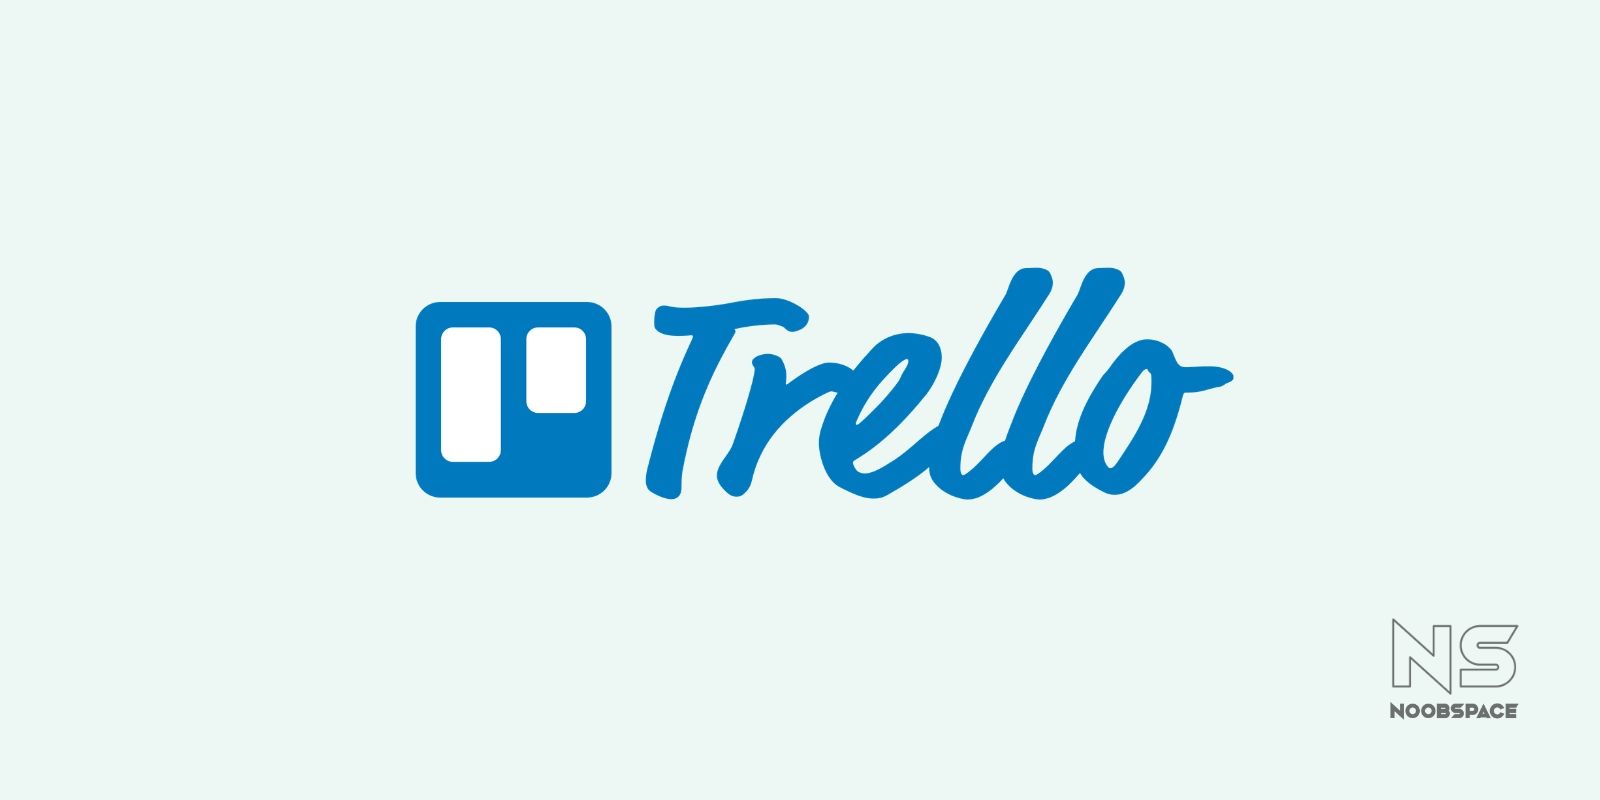 trello featured image